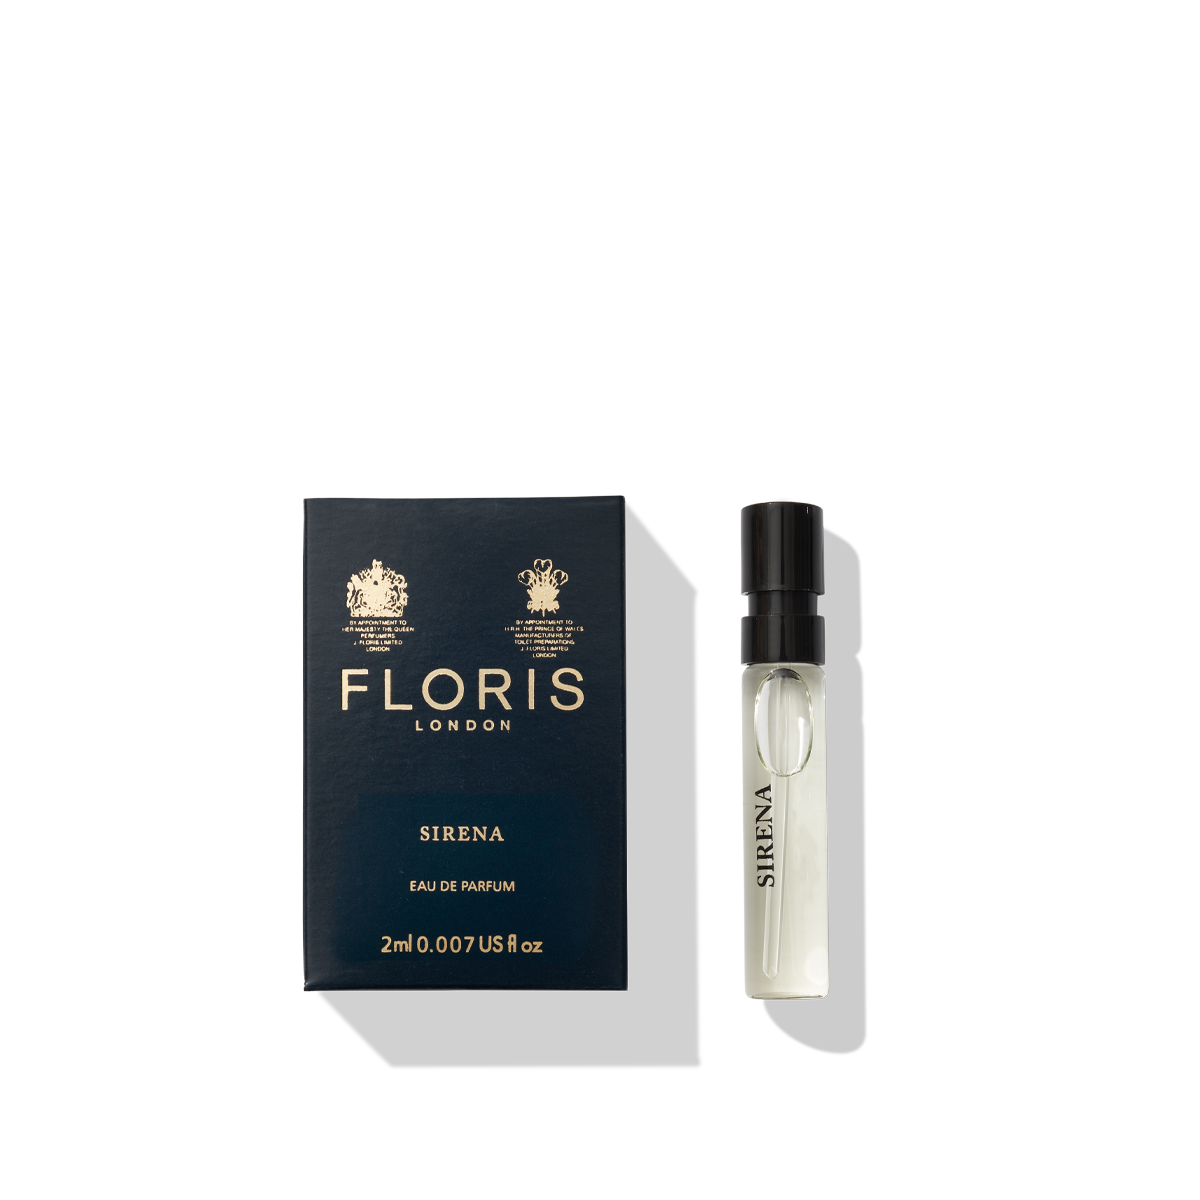 Box and vial of Sirena - Eau de Parfum by Floris London, 2ml—a sparkling floral marine fragrance that captures the essence of a feminine sea breeze.